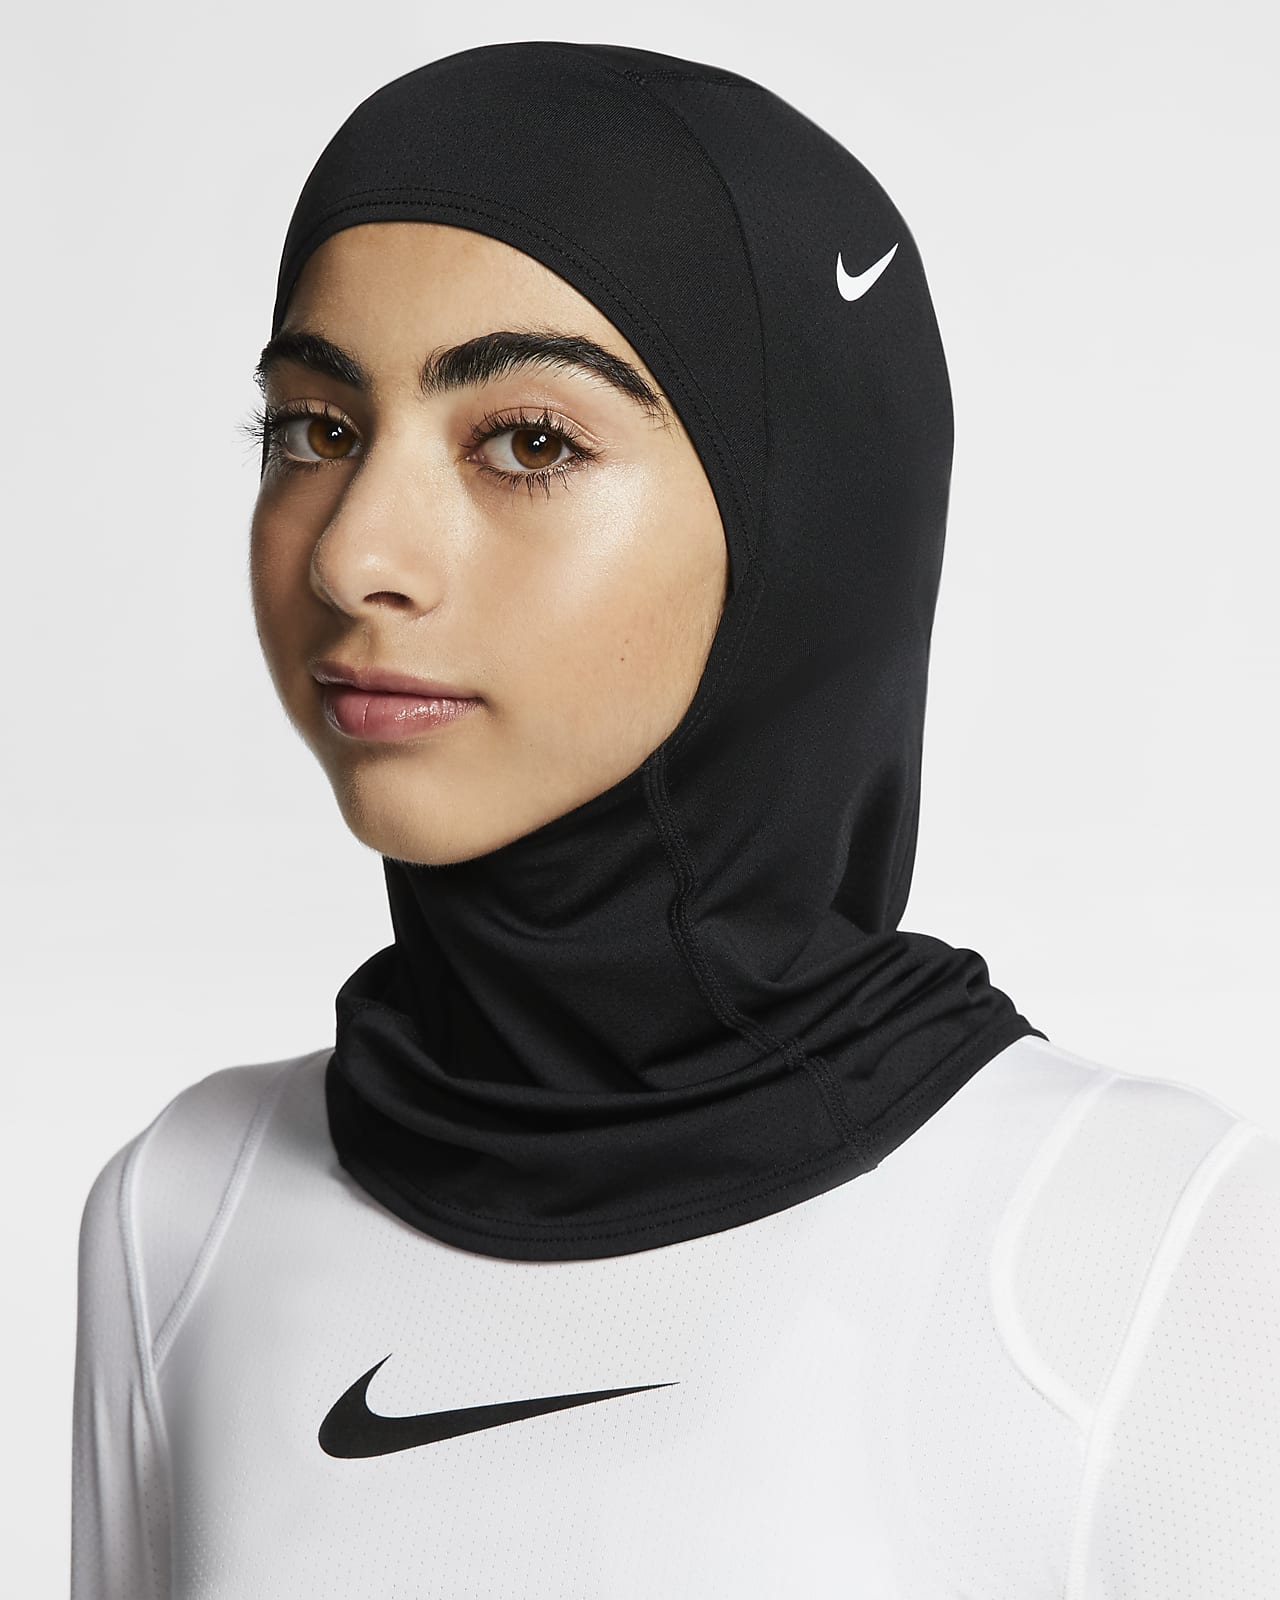 Vooroordeel Giraffe desinfecteren Nike Pro Hijab voor kids. Nike BE